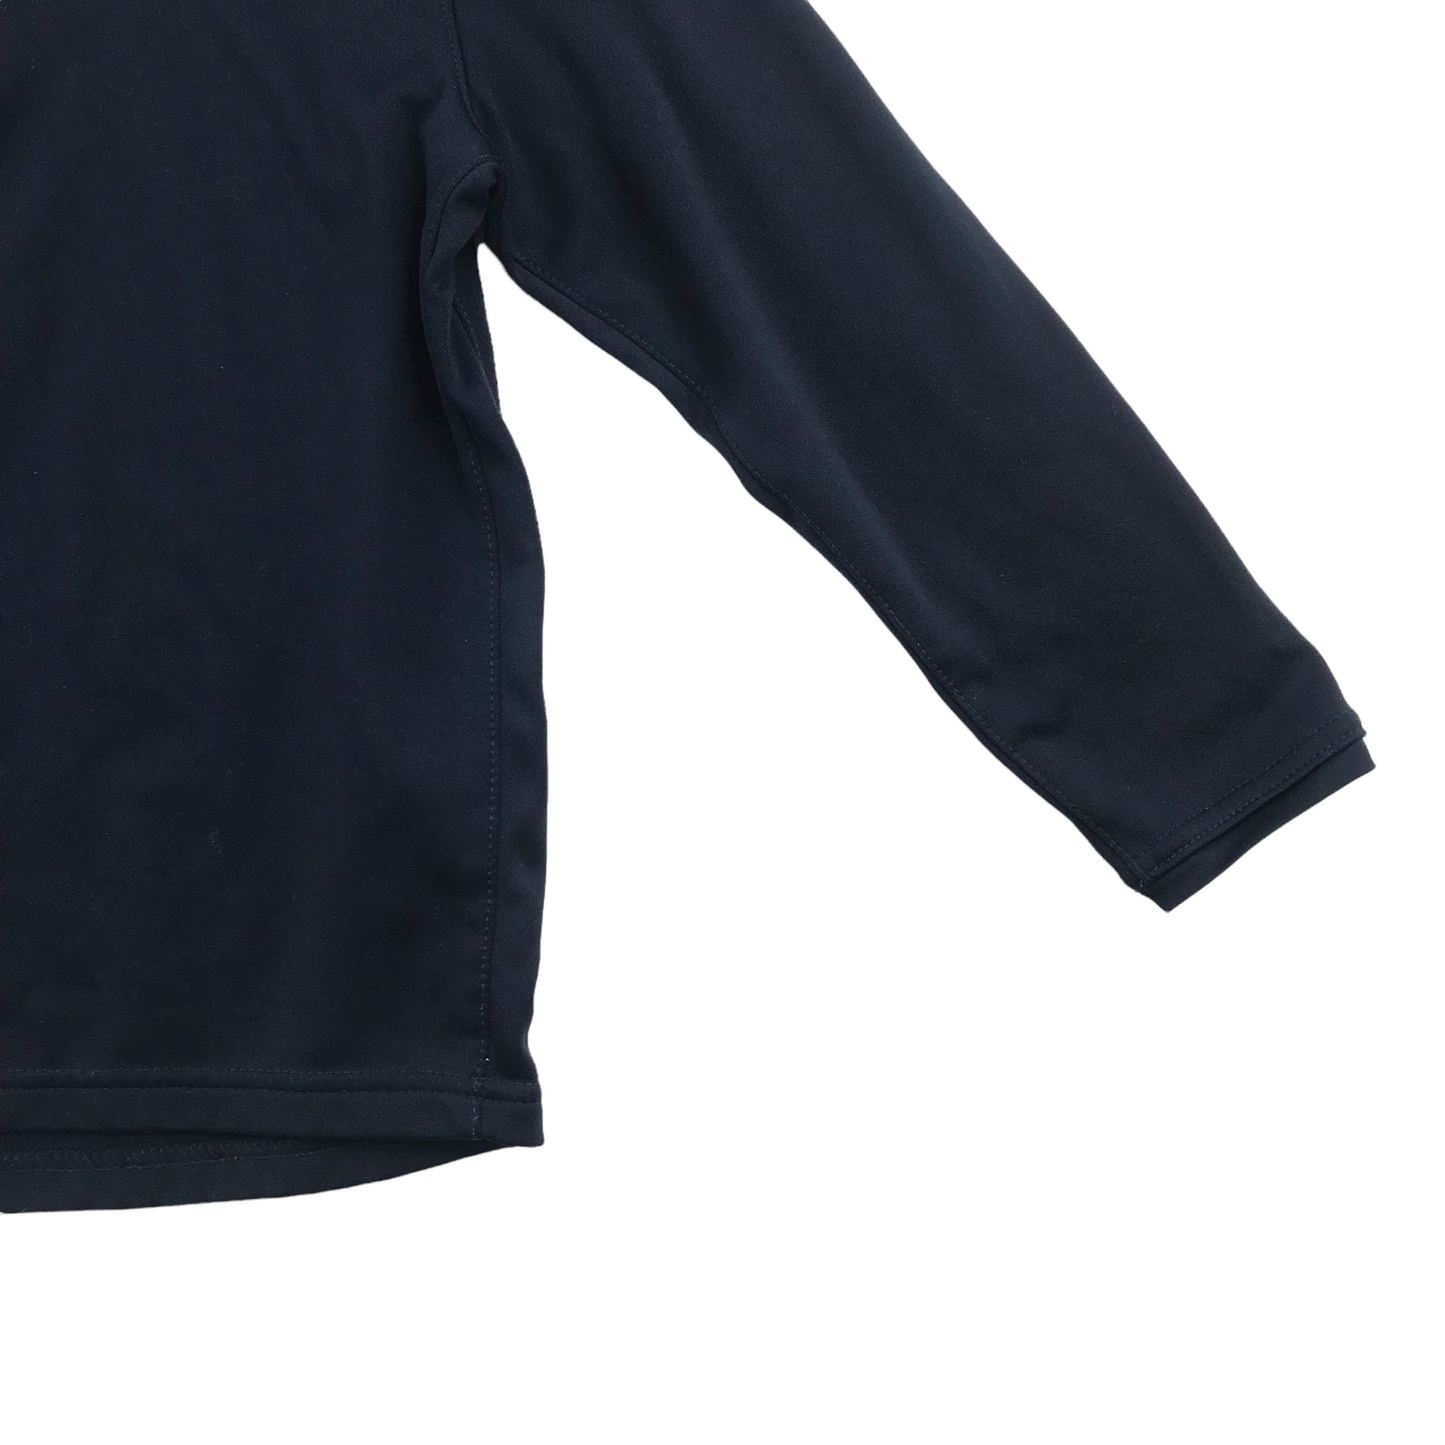 Nike Black Zipper Sweatshirt Age 6